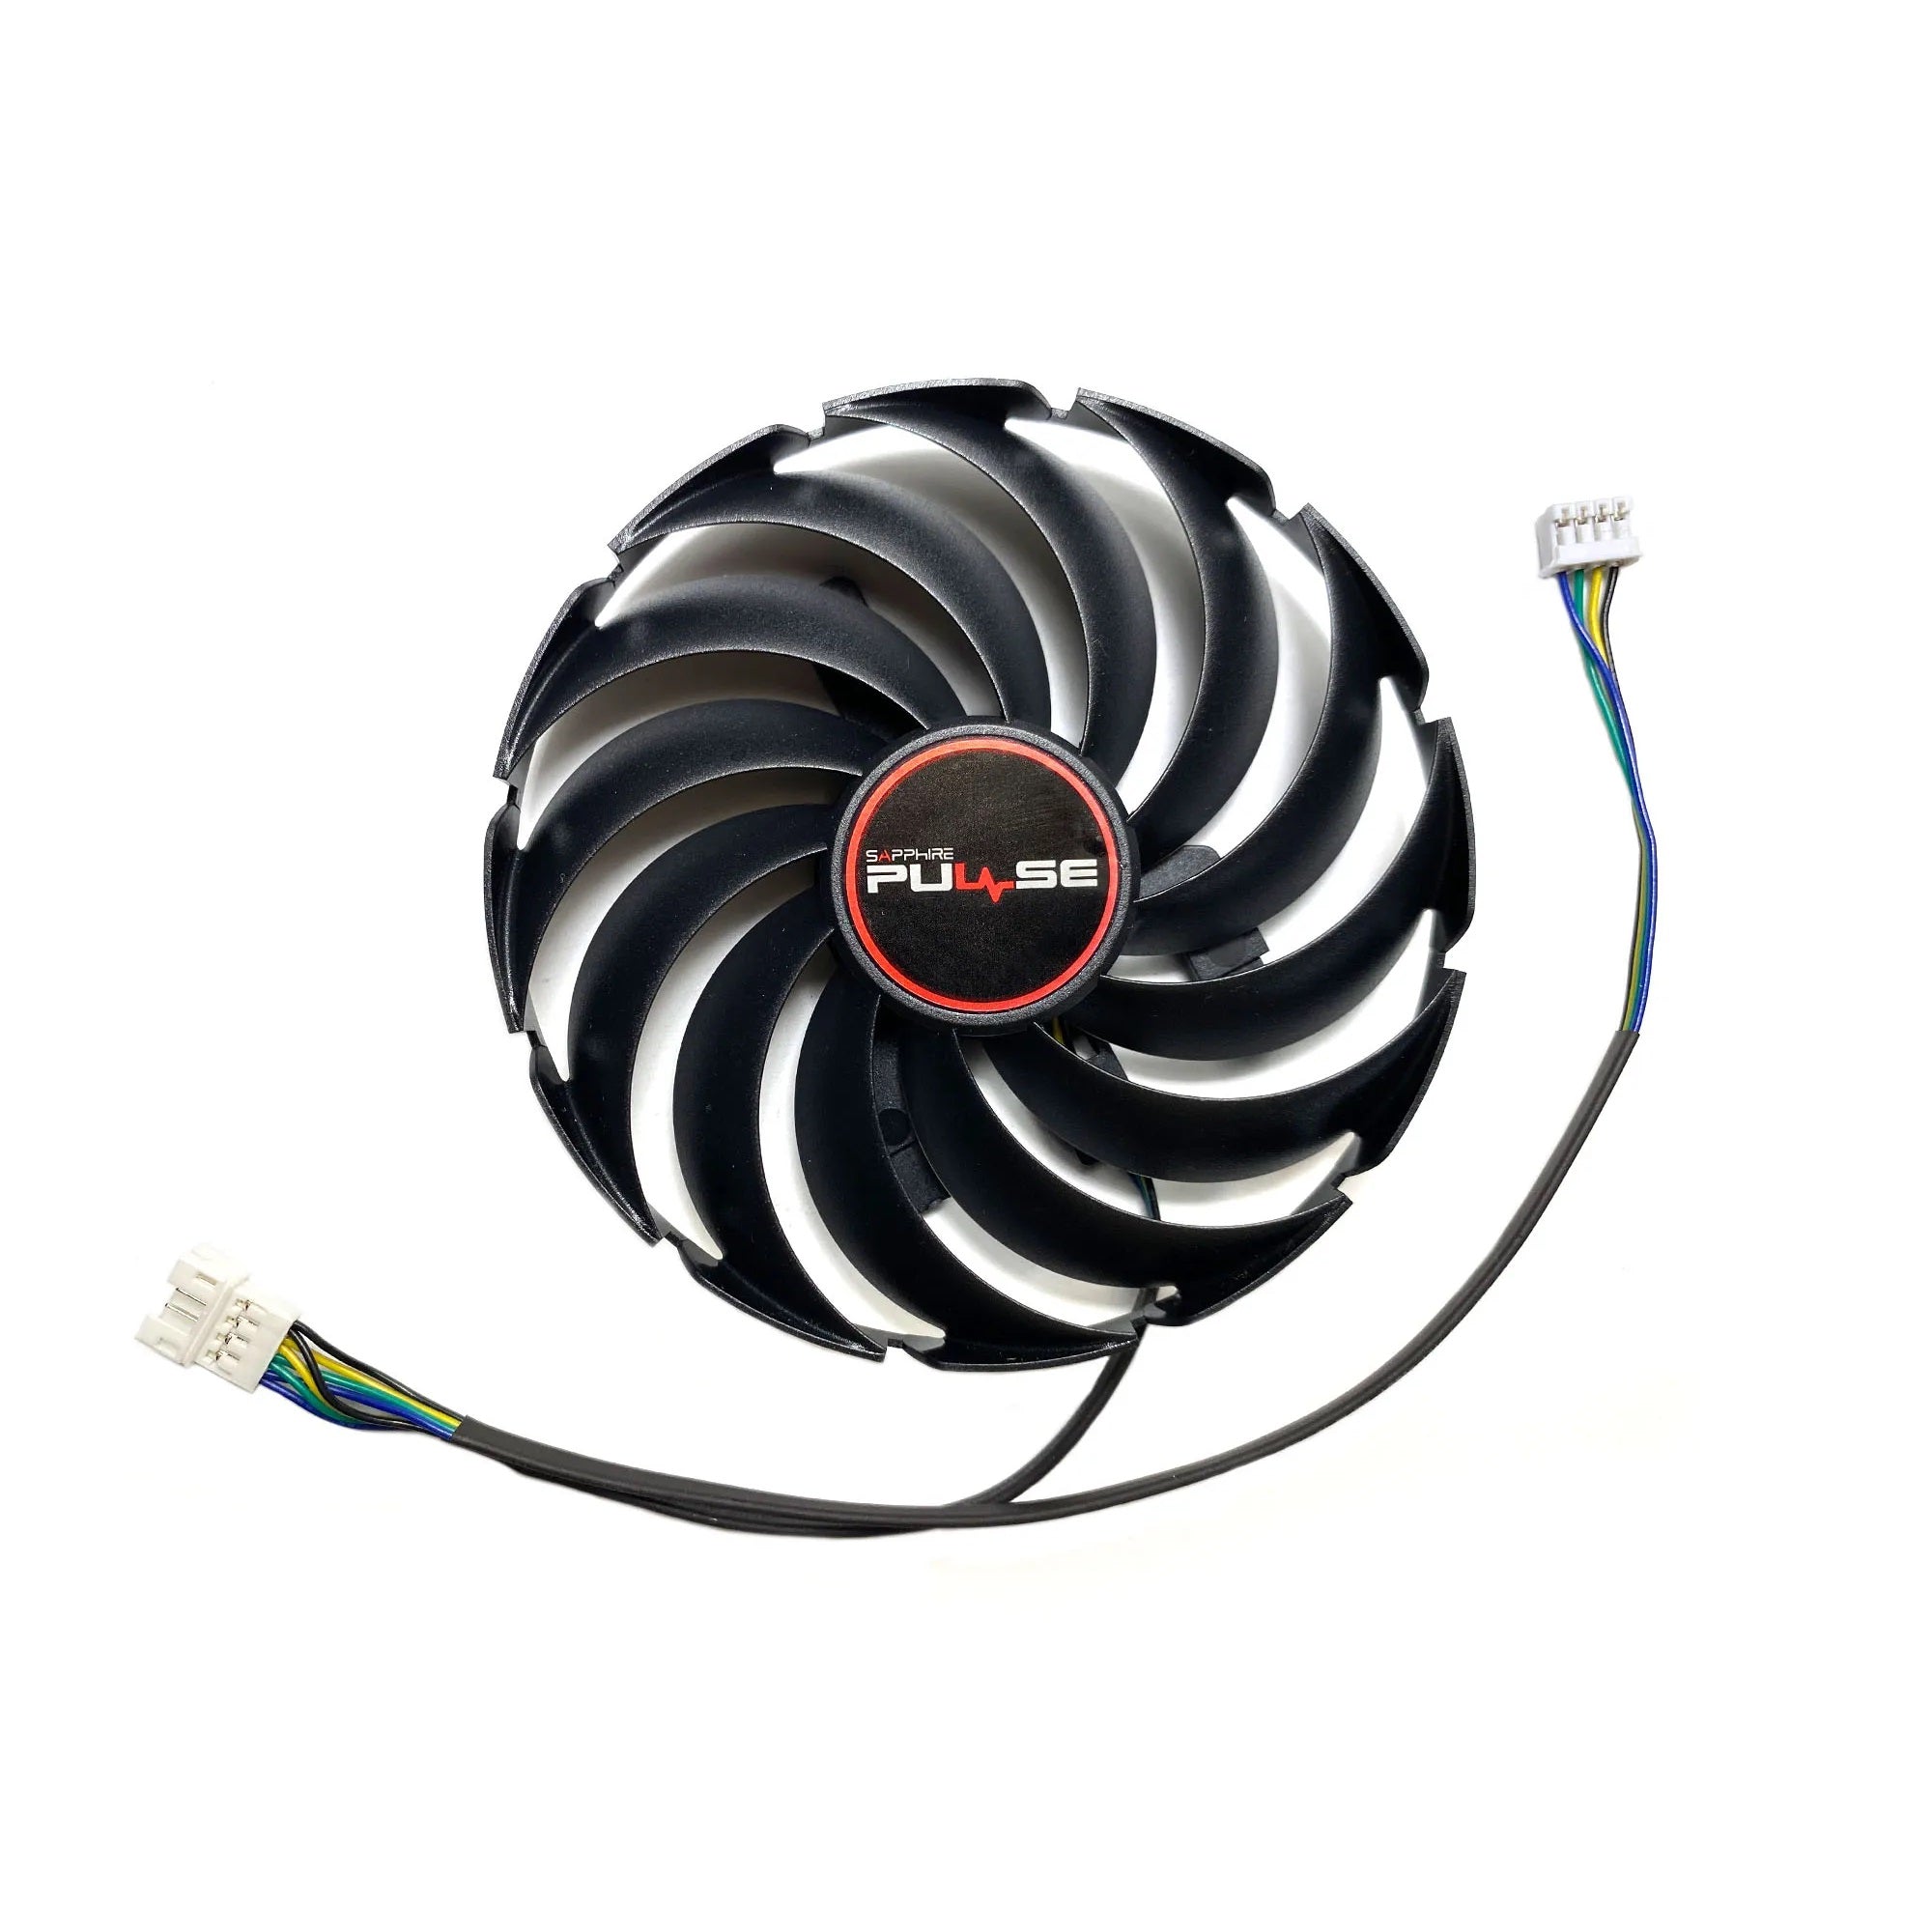 SAPPHIRE Radeon RX 6700, 6700 XT PULSE GPU Fan Replacement